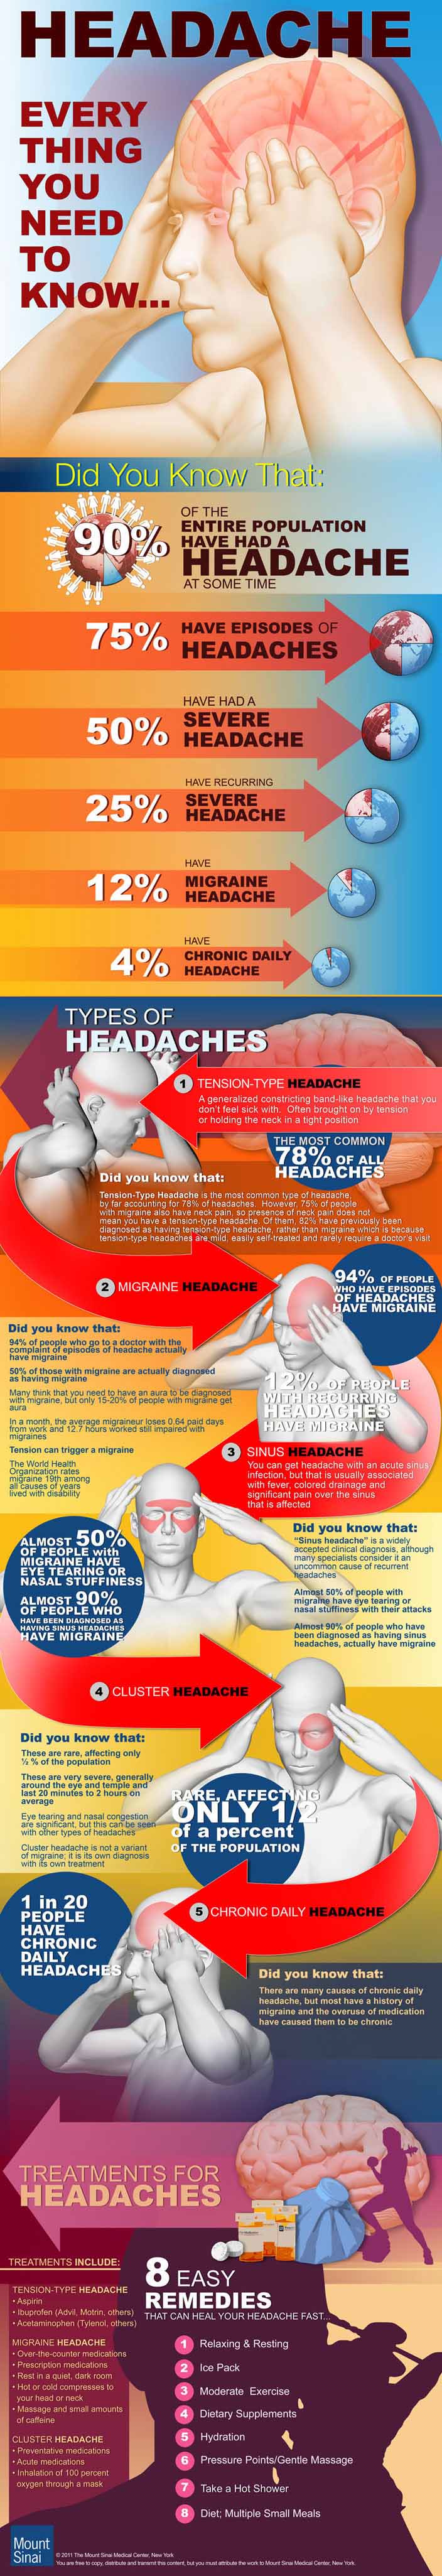 Headache infographic